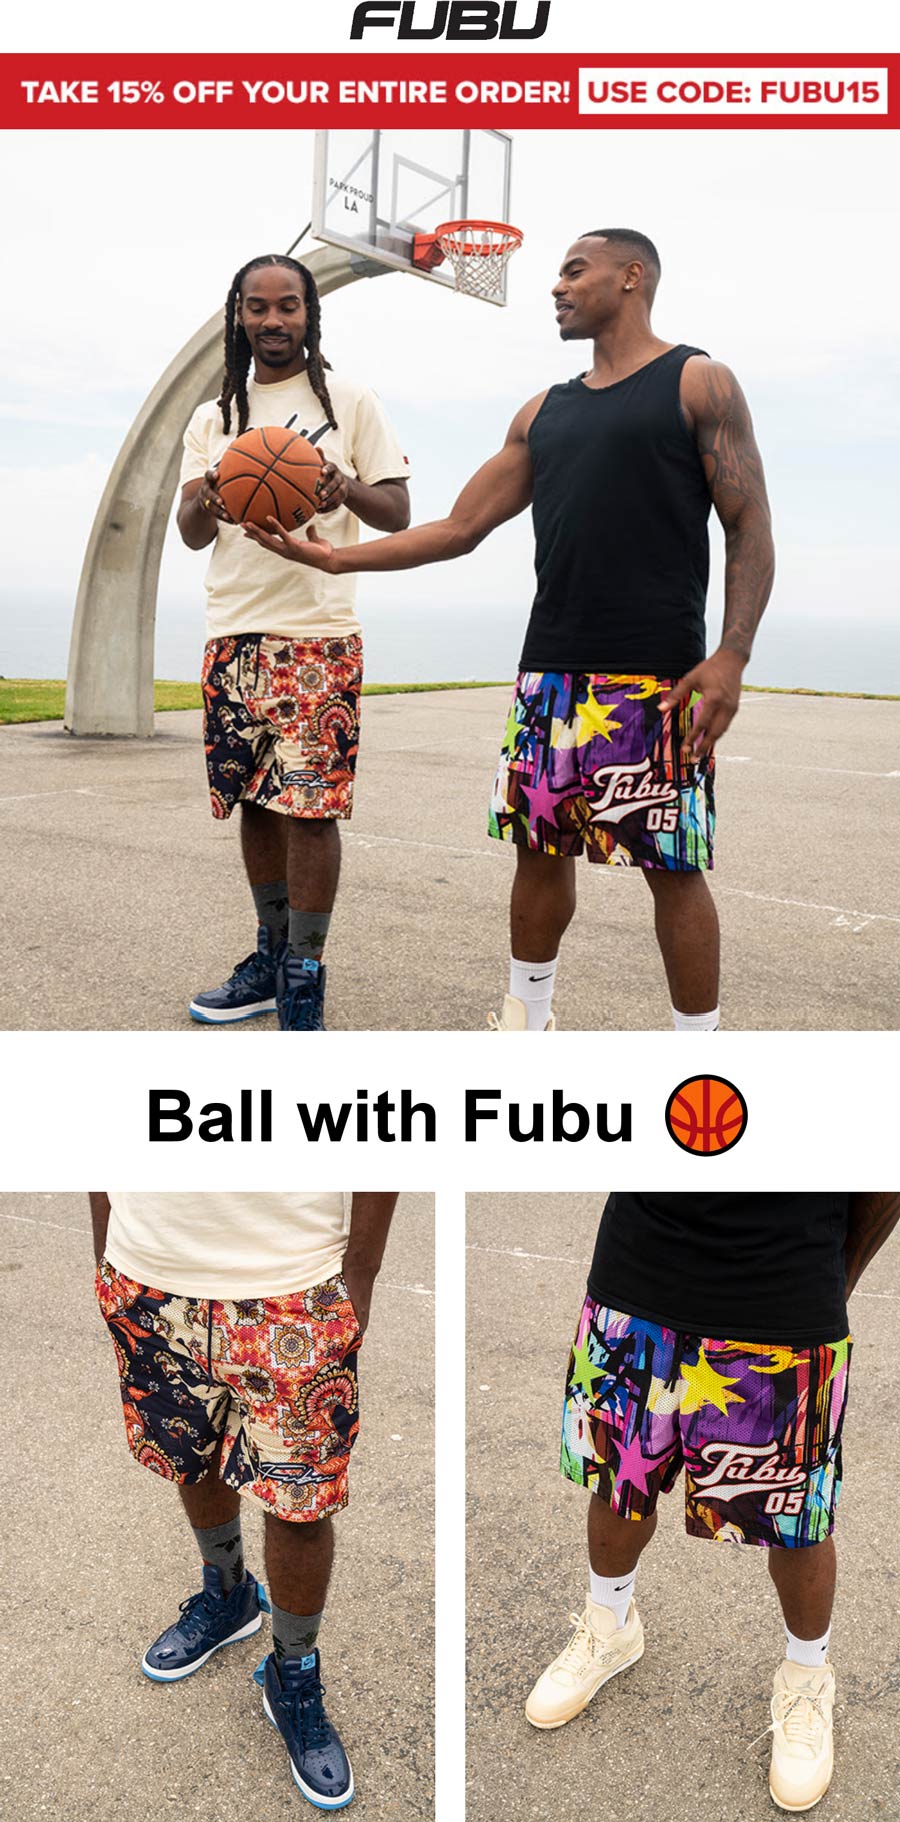 FUBU stores Coupon  15% off at FUBU via promo code FUBU15 #fubu 